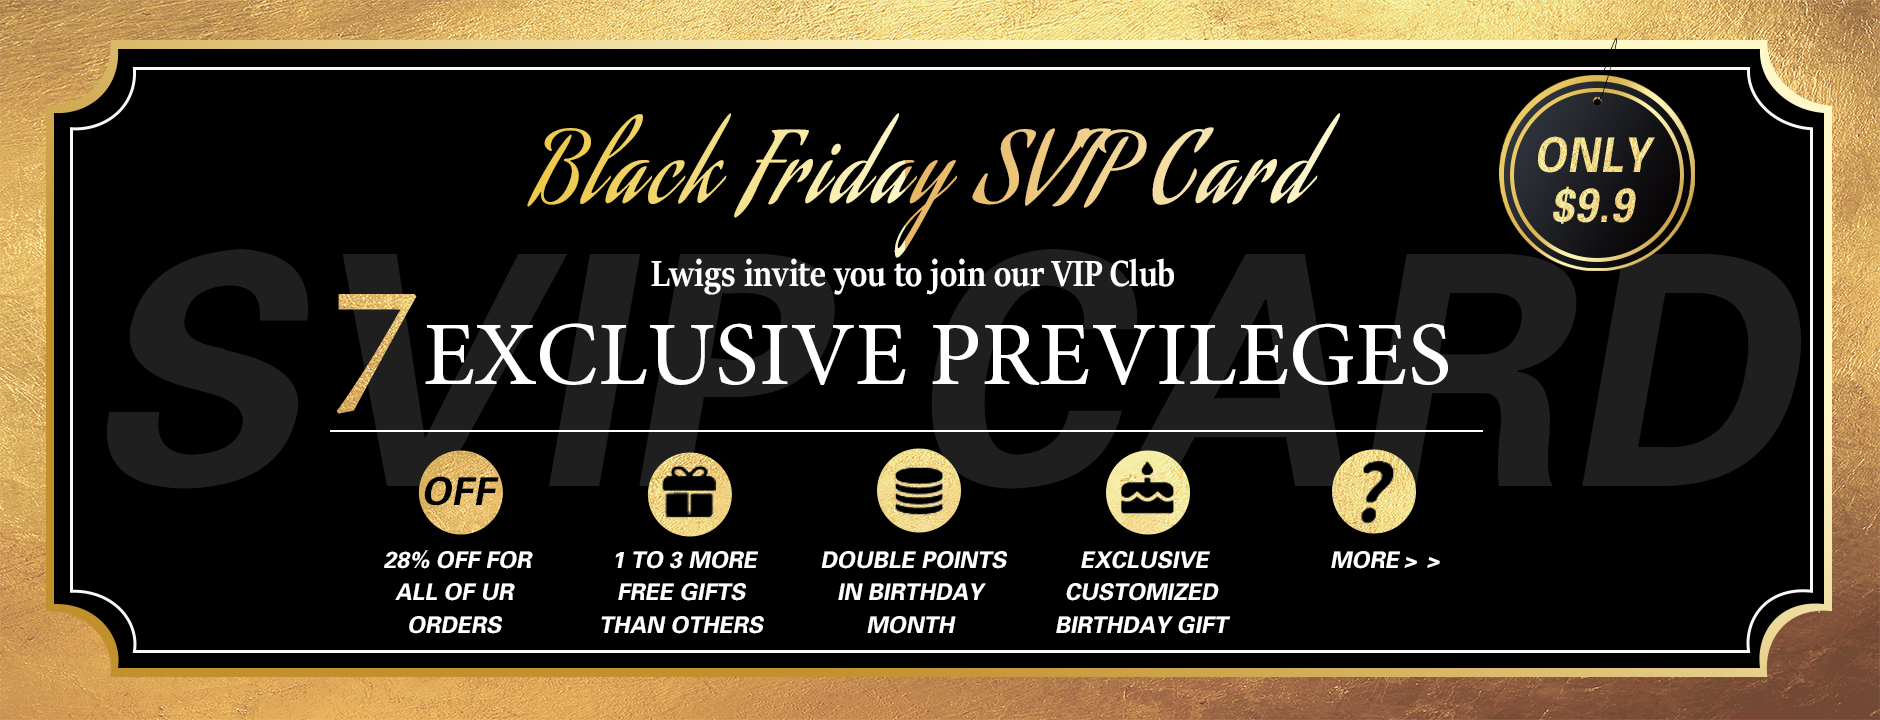 lwigs,VIP card, svip, exclusive previleges, vip service